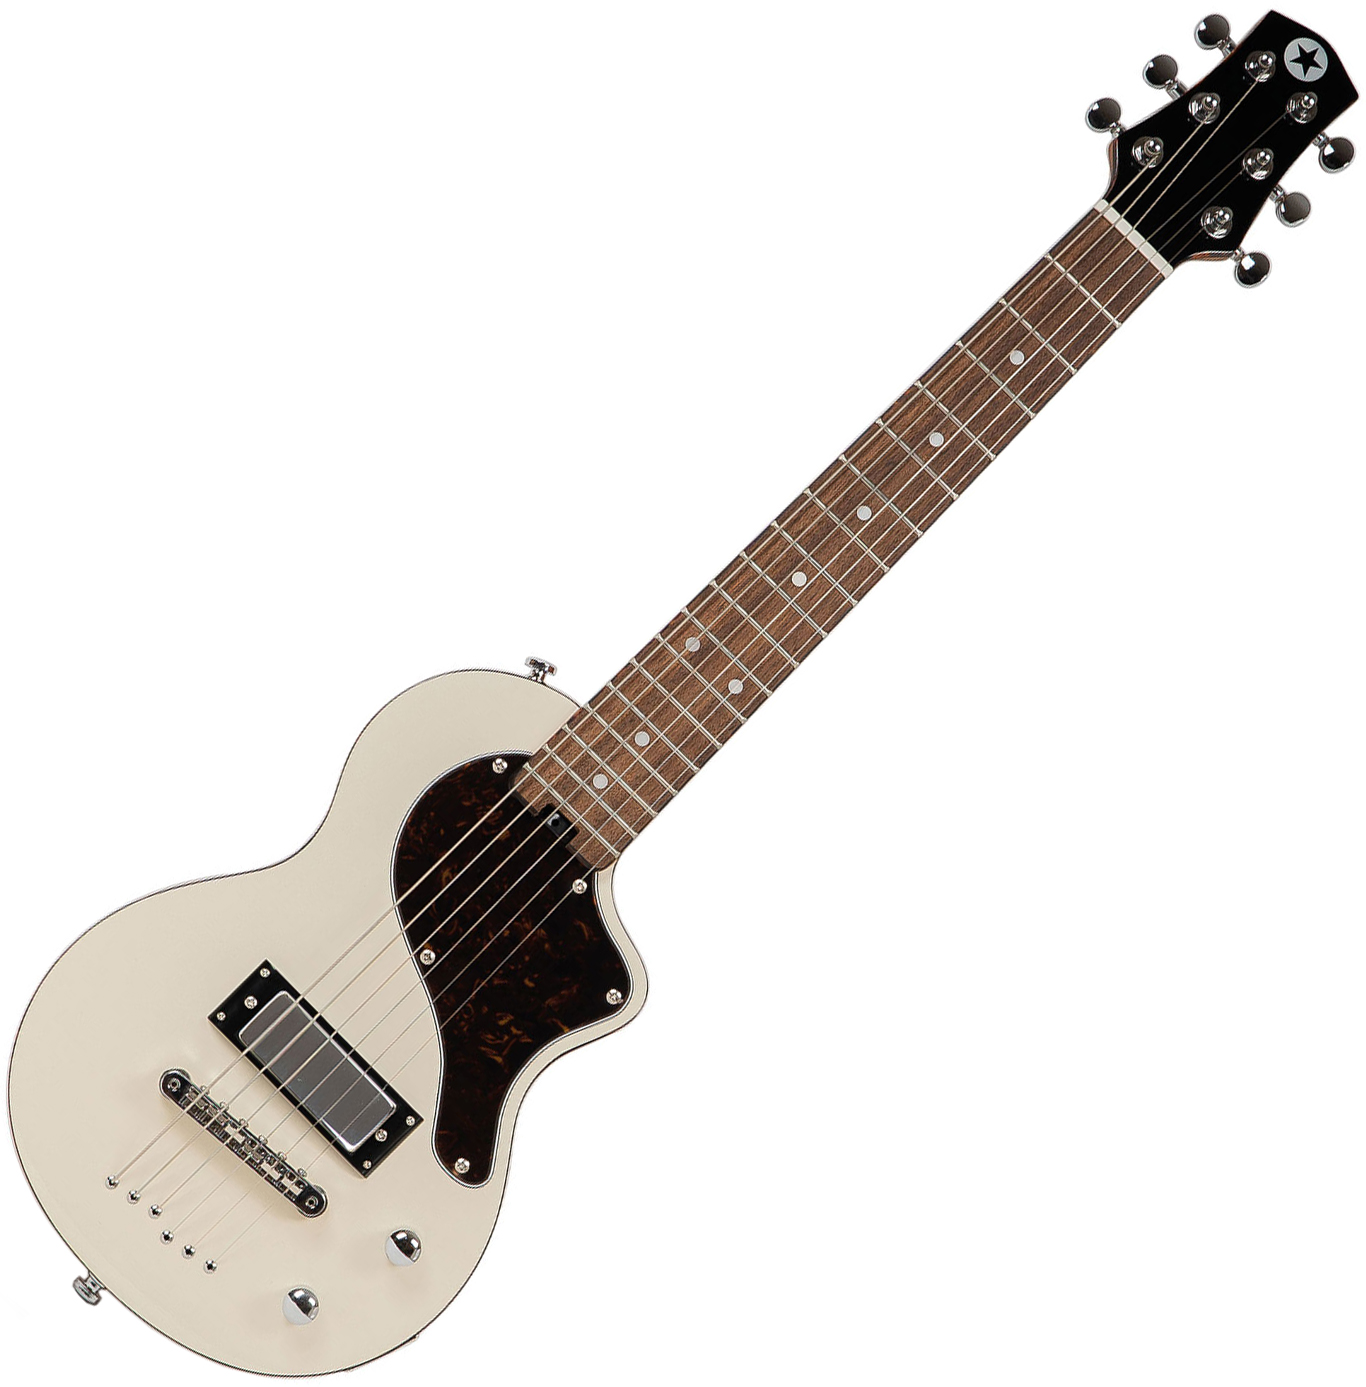 Blackstar Carry-on Travel Guitar Standard Pack +amplug2 Fly +housse - White - Electric guitar set - Variation 1